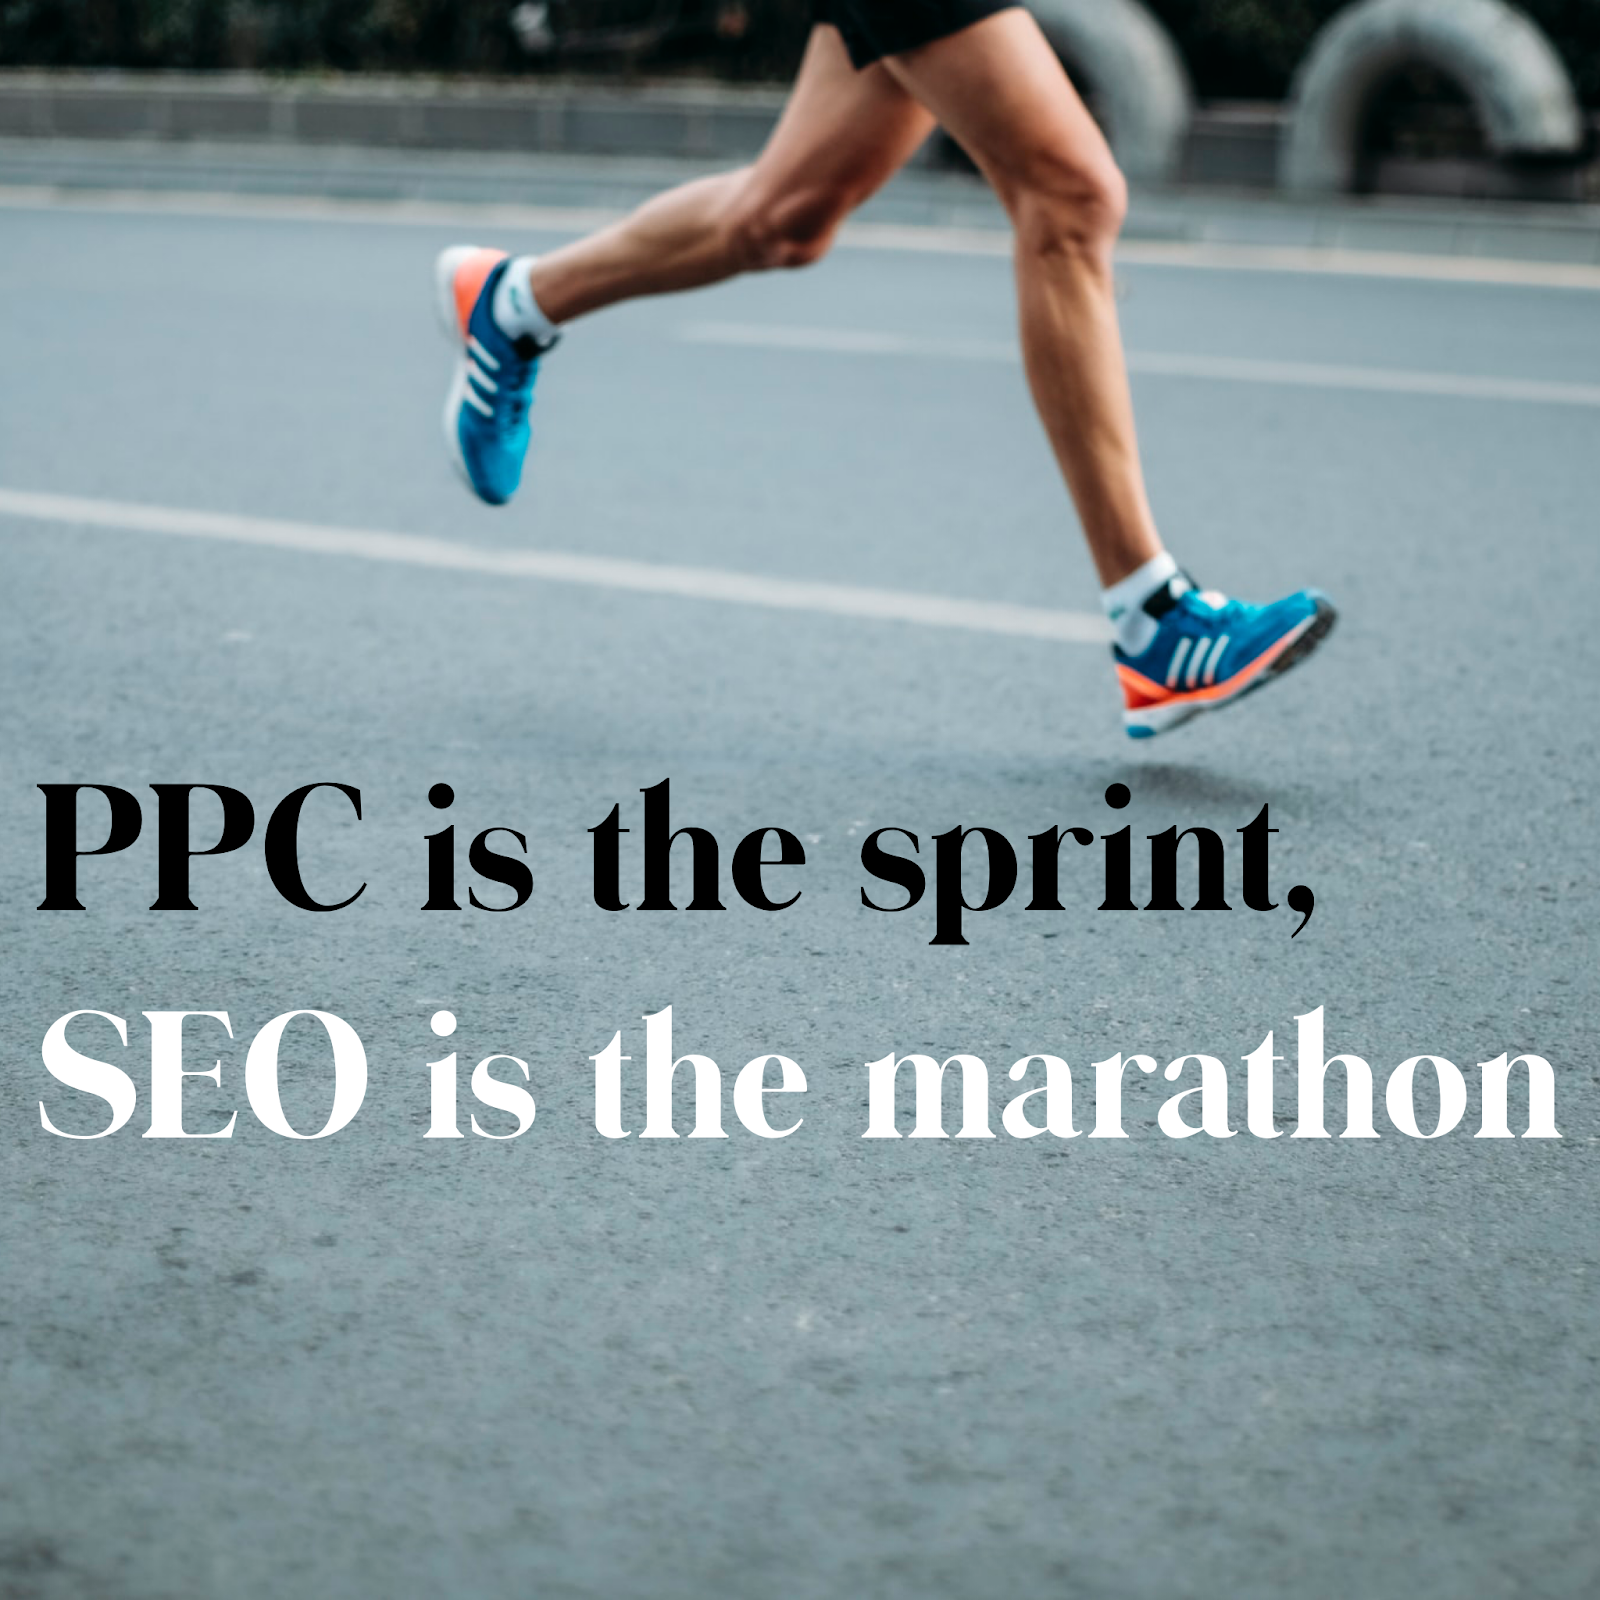 PPC is the sprint, SEO is the marathon